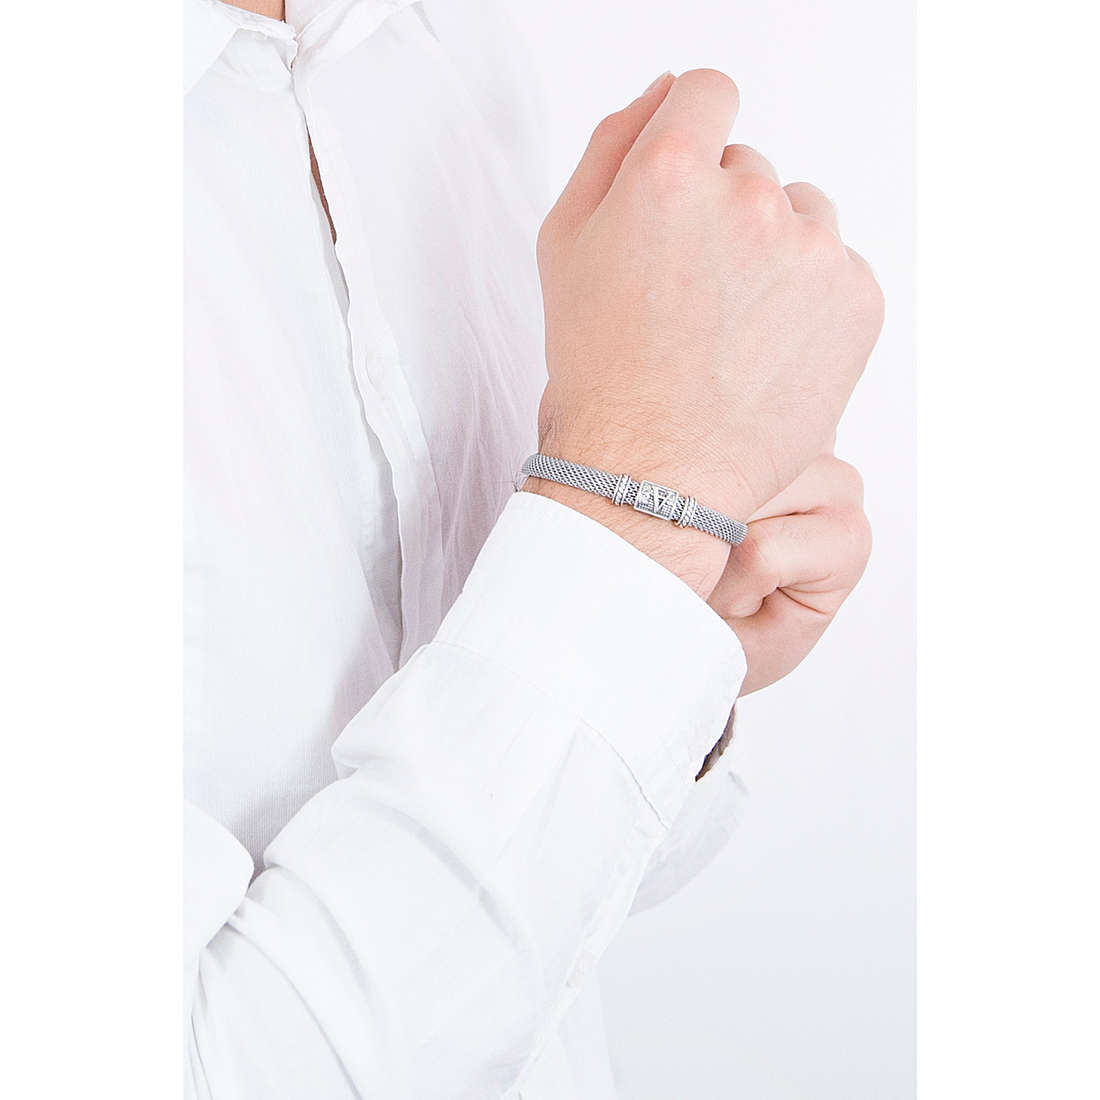 Cesare Paciotti bracelets Silver Initial man JPNC1896M4 wearing